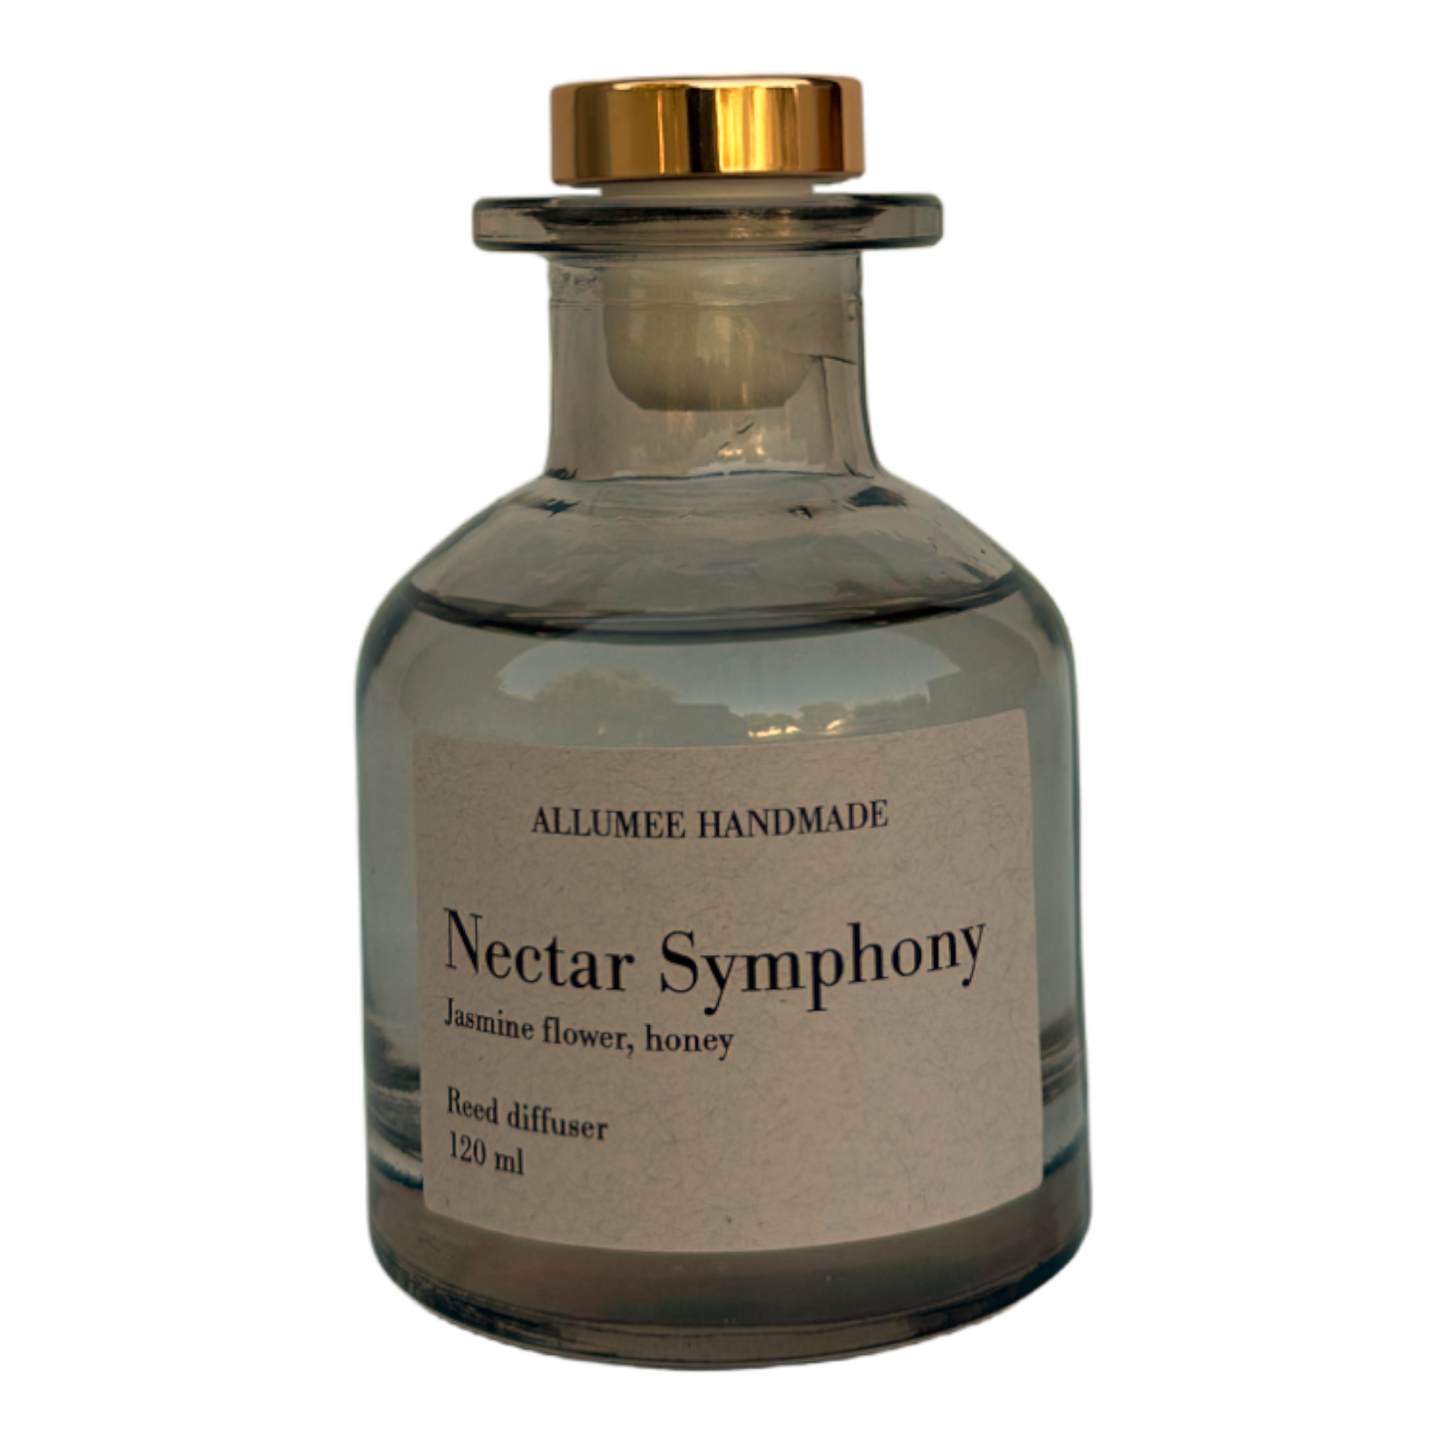 Nectar Symphony